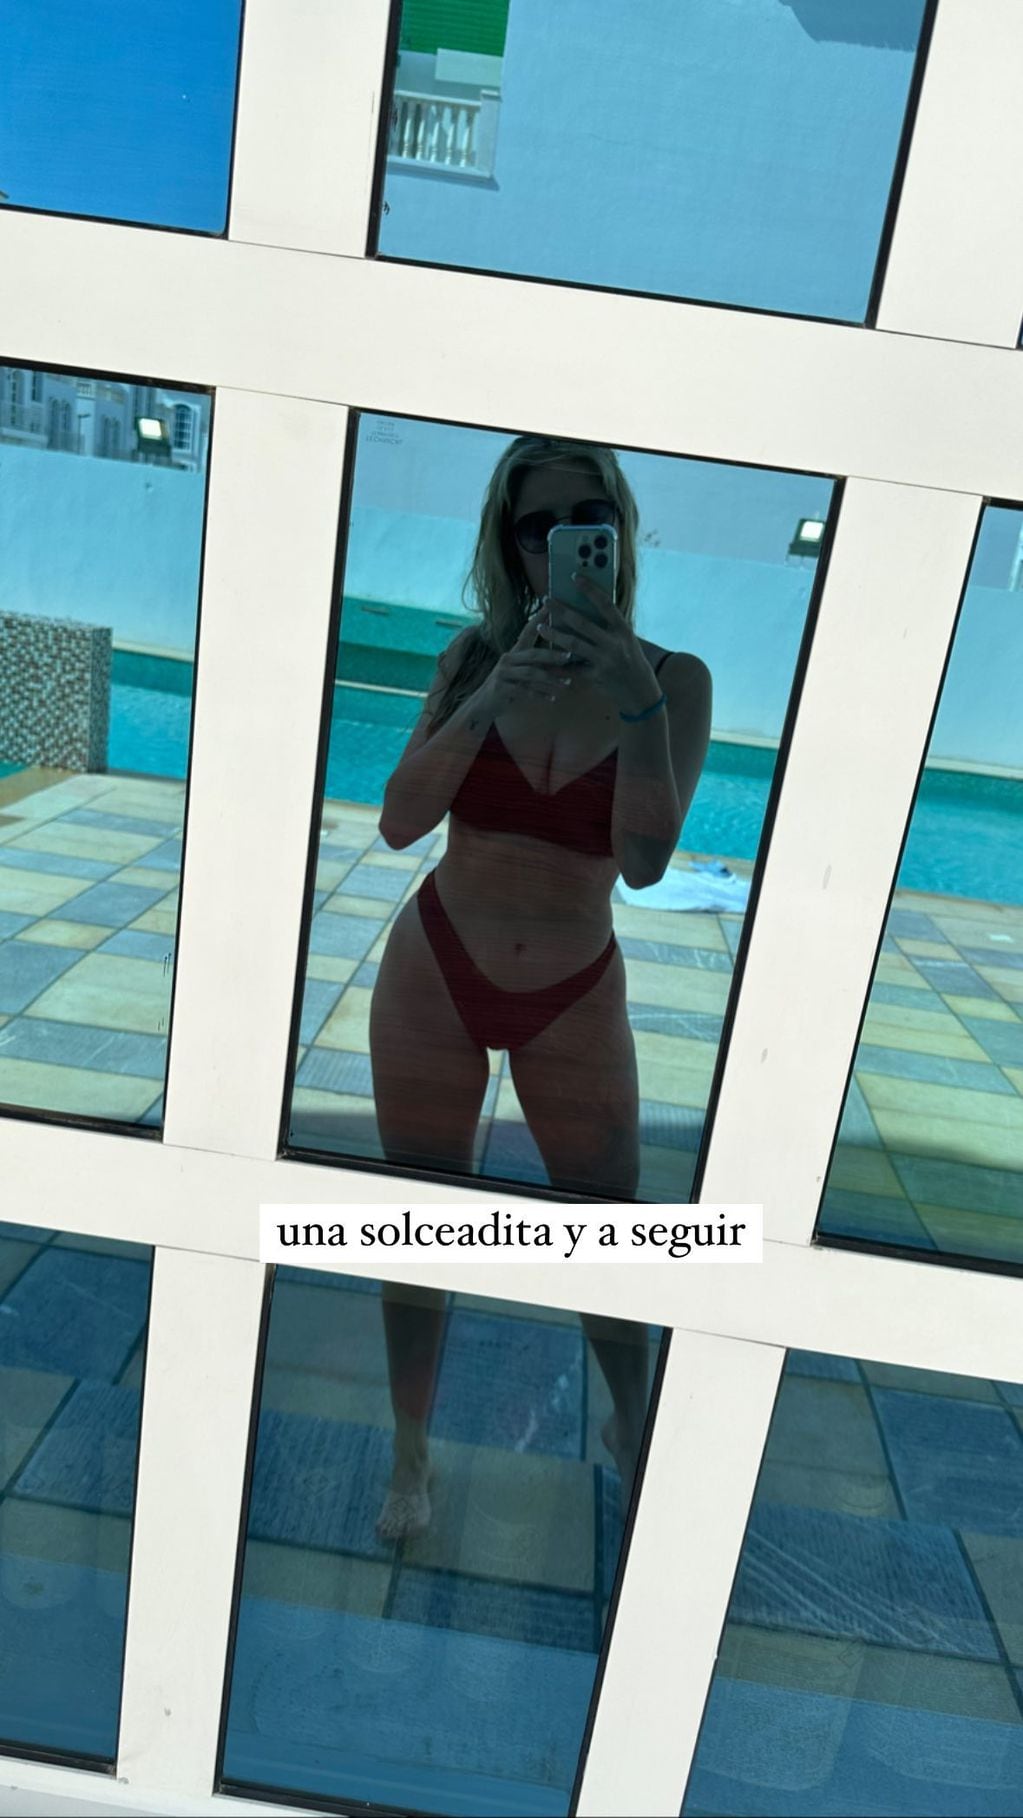 Nati Jota posó en traje de baño e incendió Instagram desde Qatar